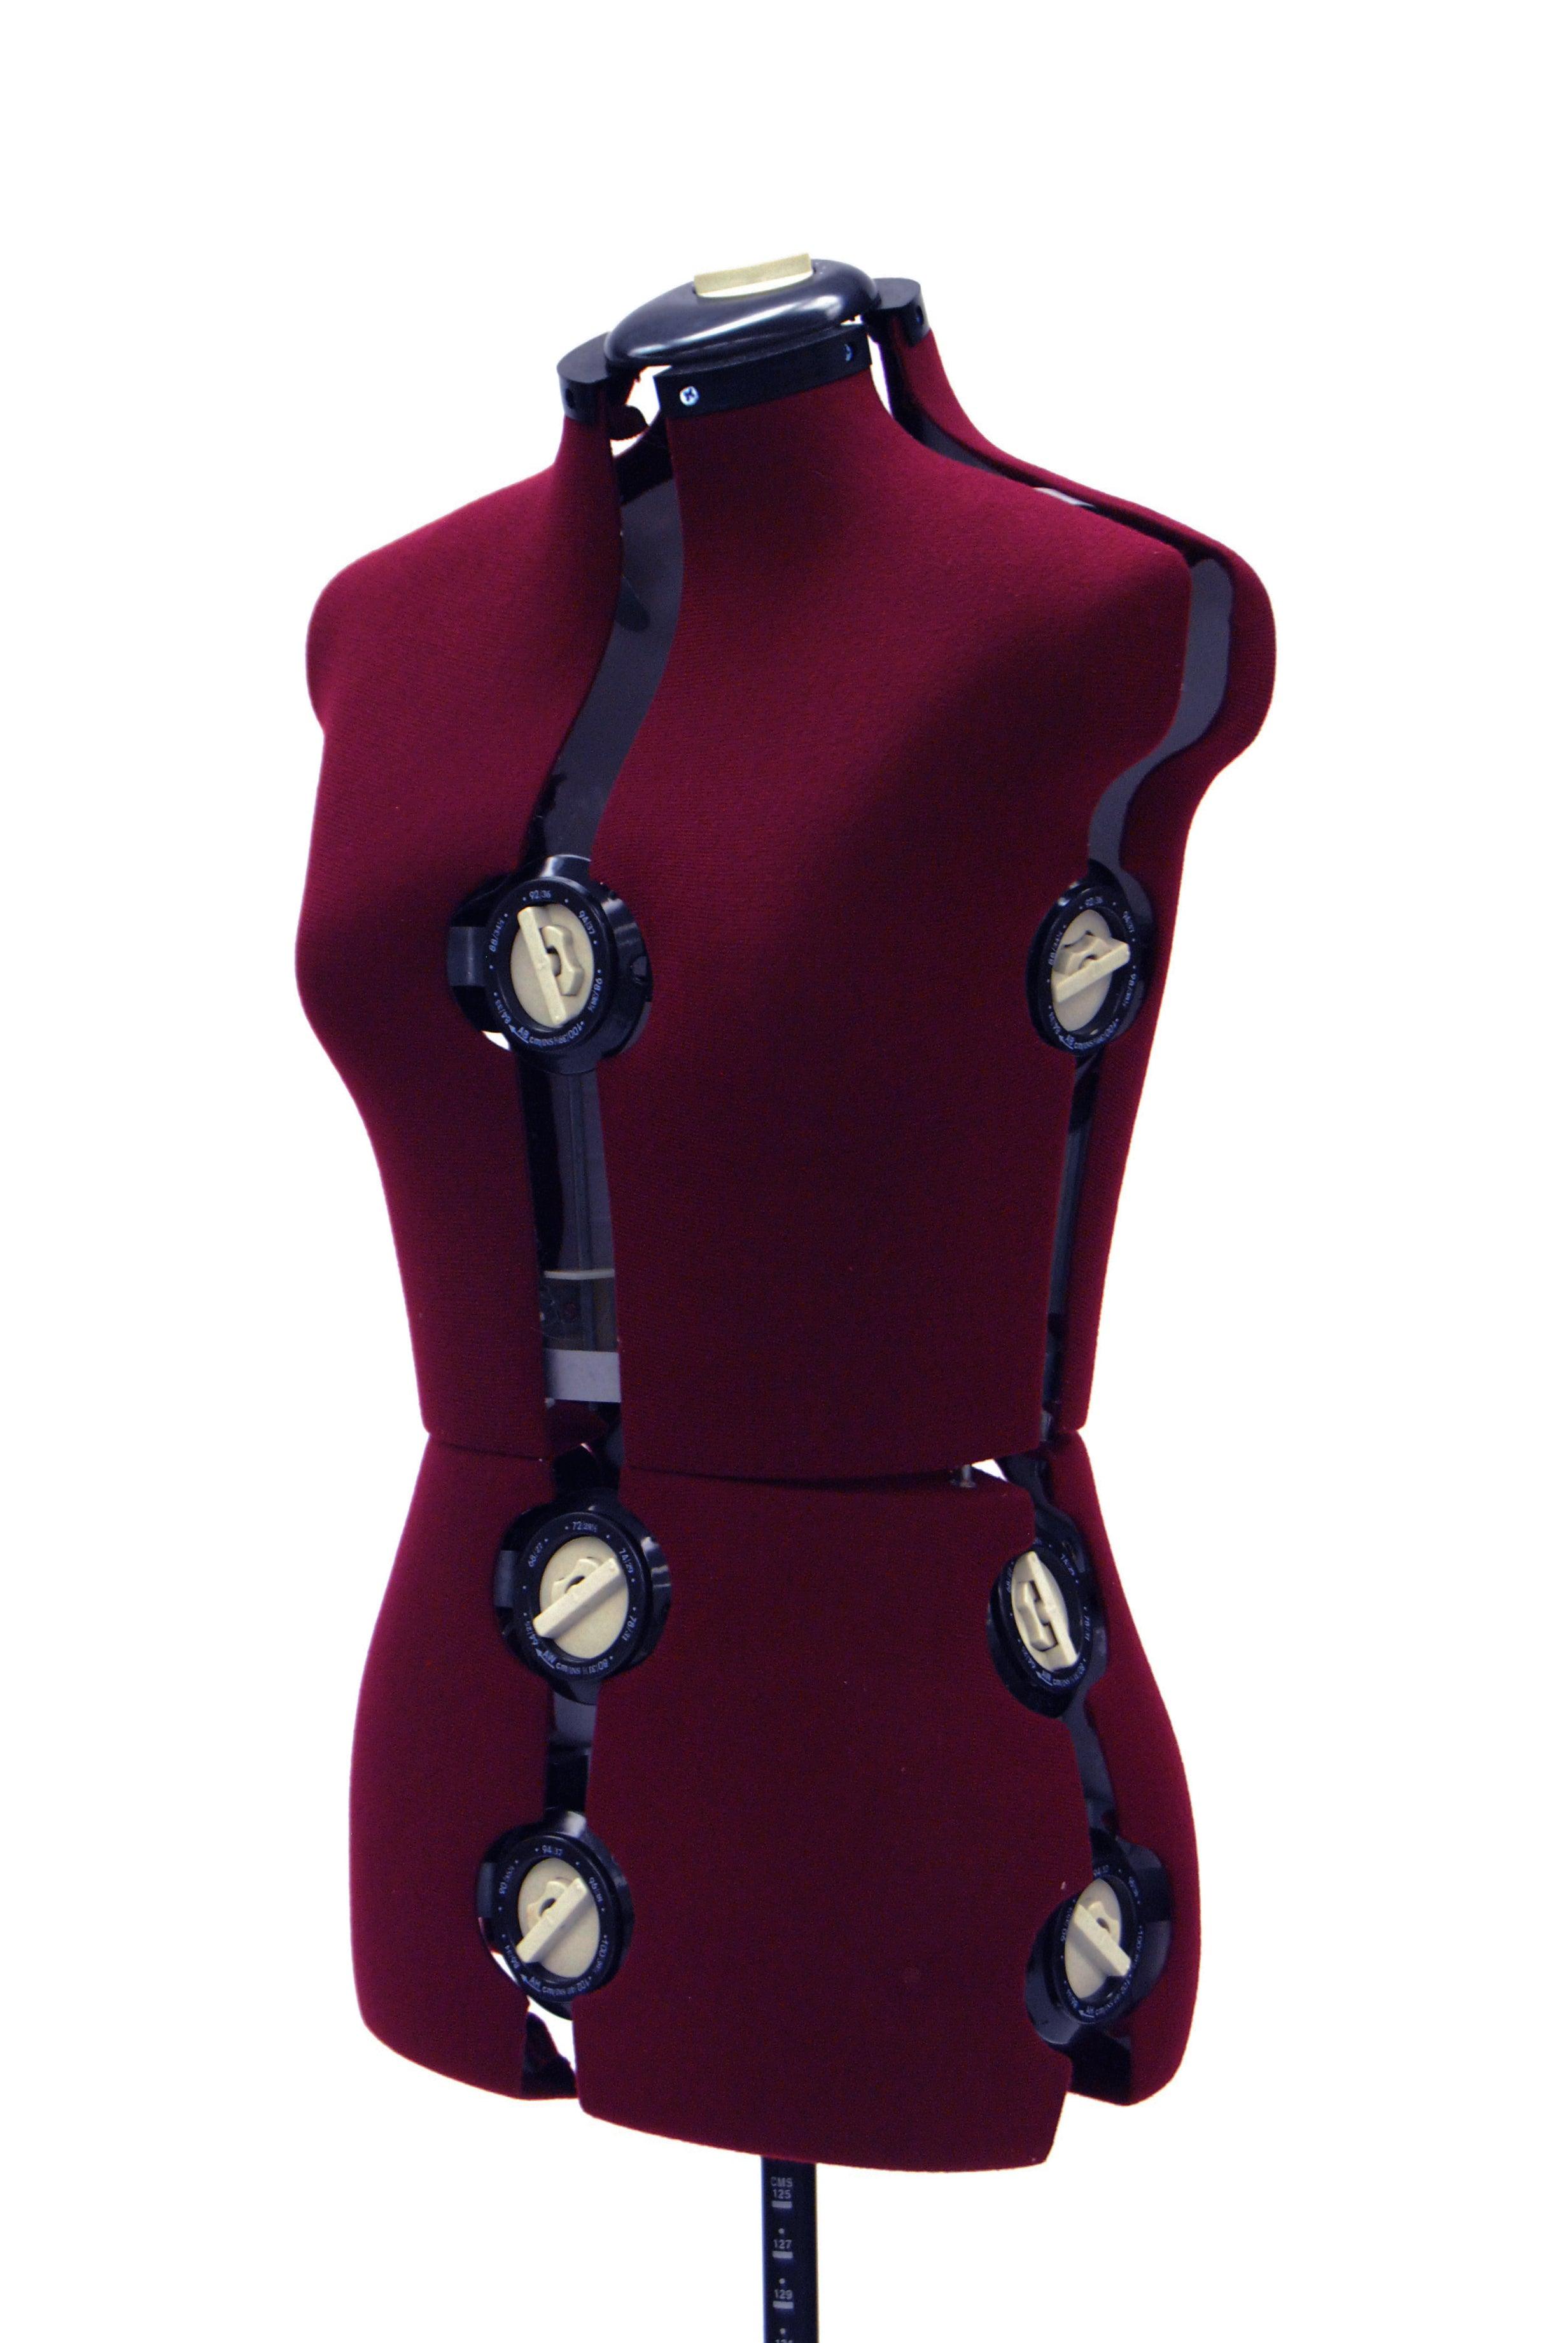 Dress form, adjustable size 36-48 - DRESS FORM PREMIUM MULTI FLEX